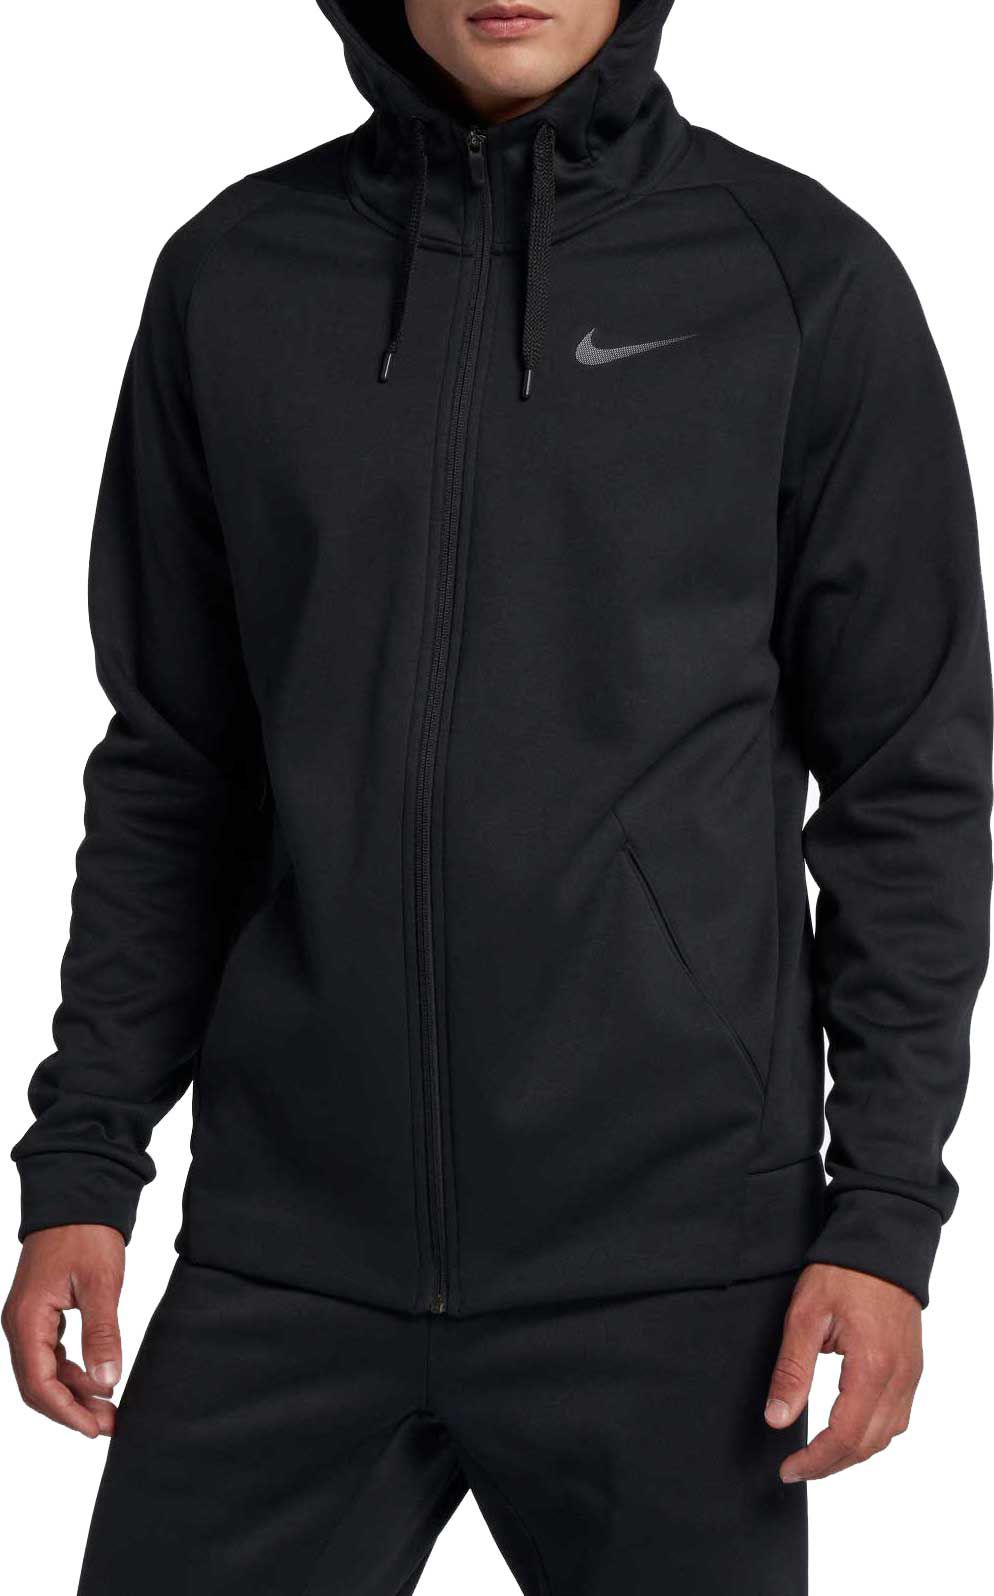 Nike Men's Therma Full Zip Hooded Jacket (Regular and Big & Tall) - .97 - .97